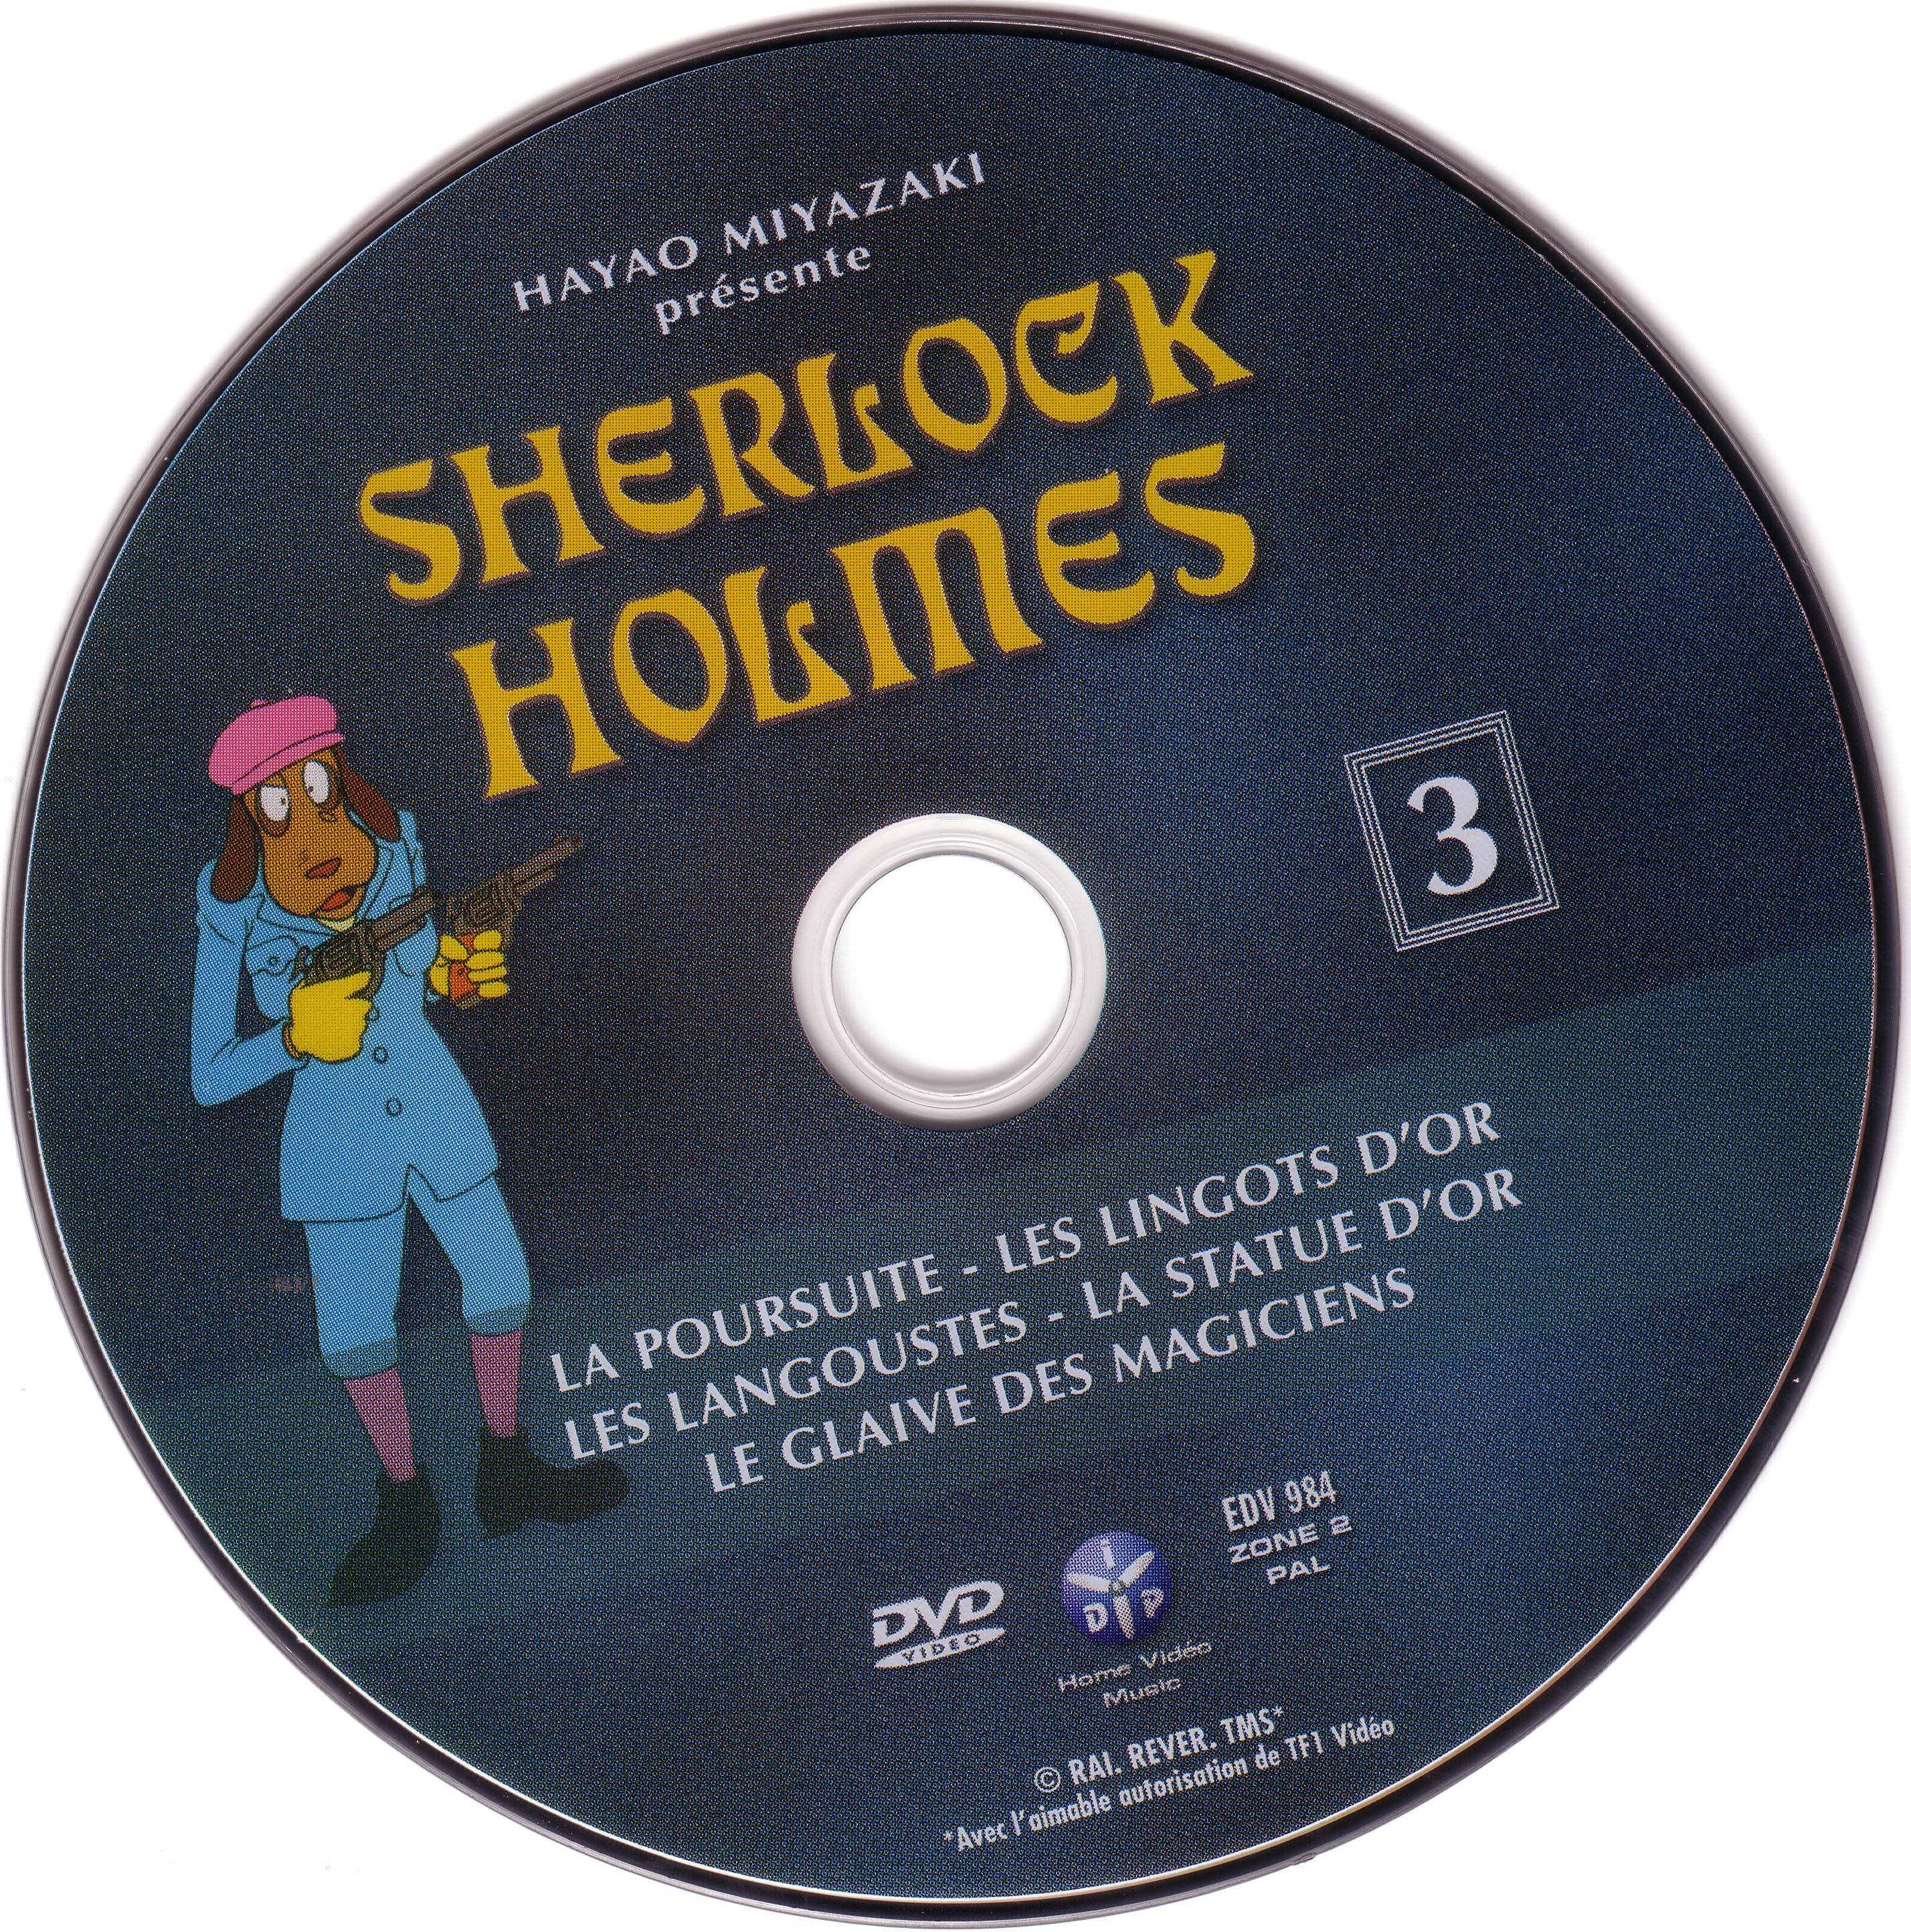 Sherlock Holmes vol 3